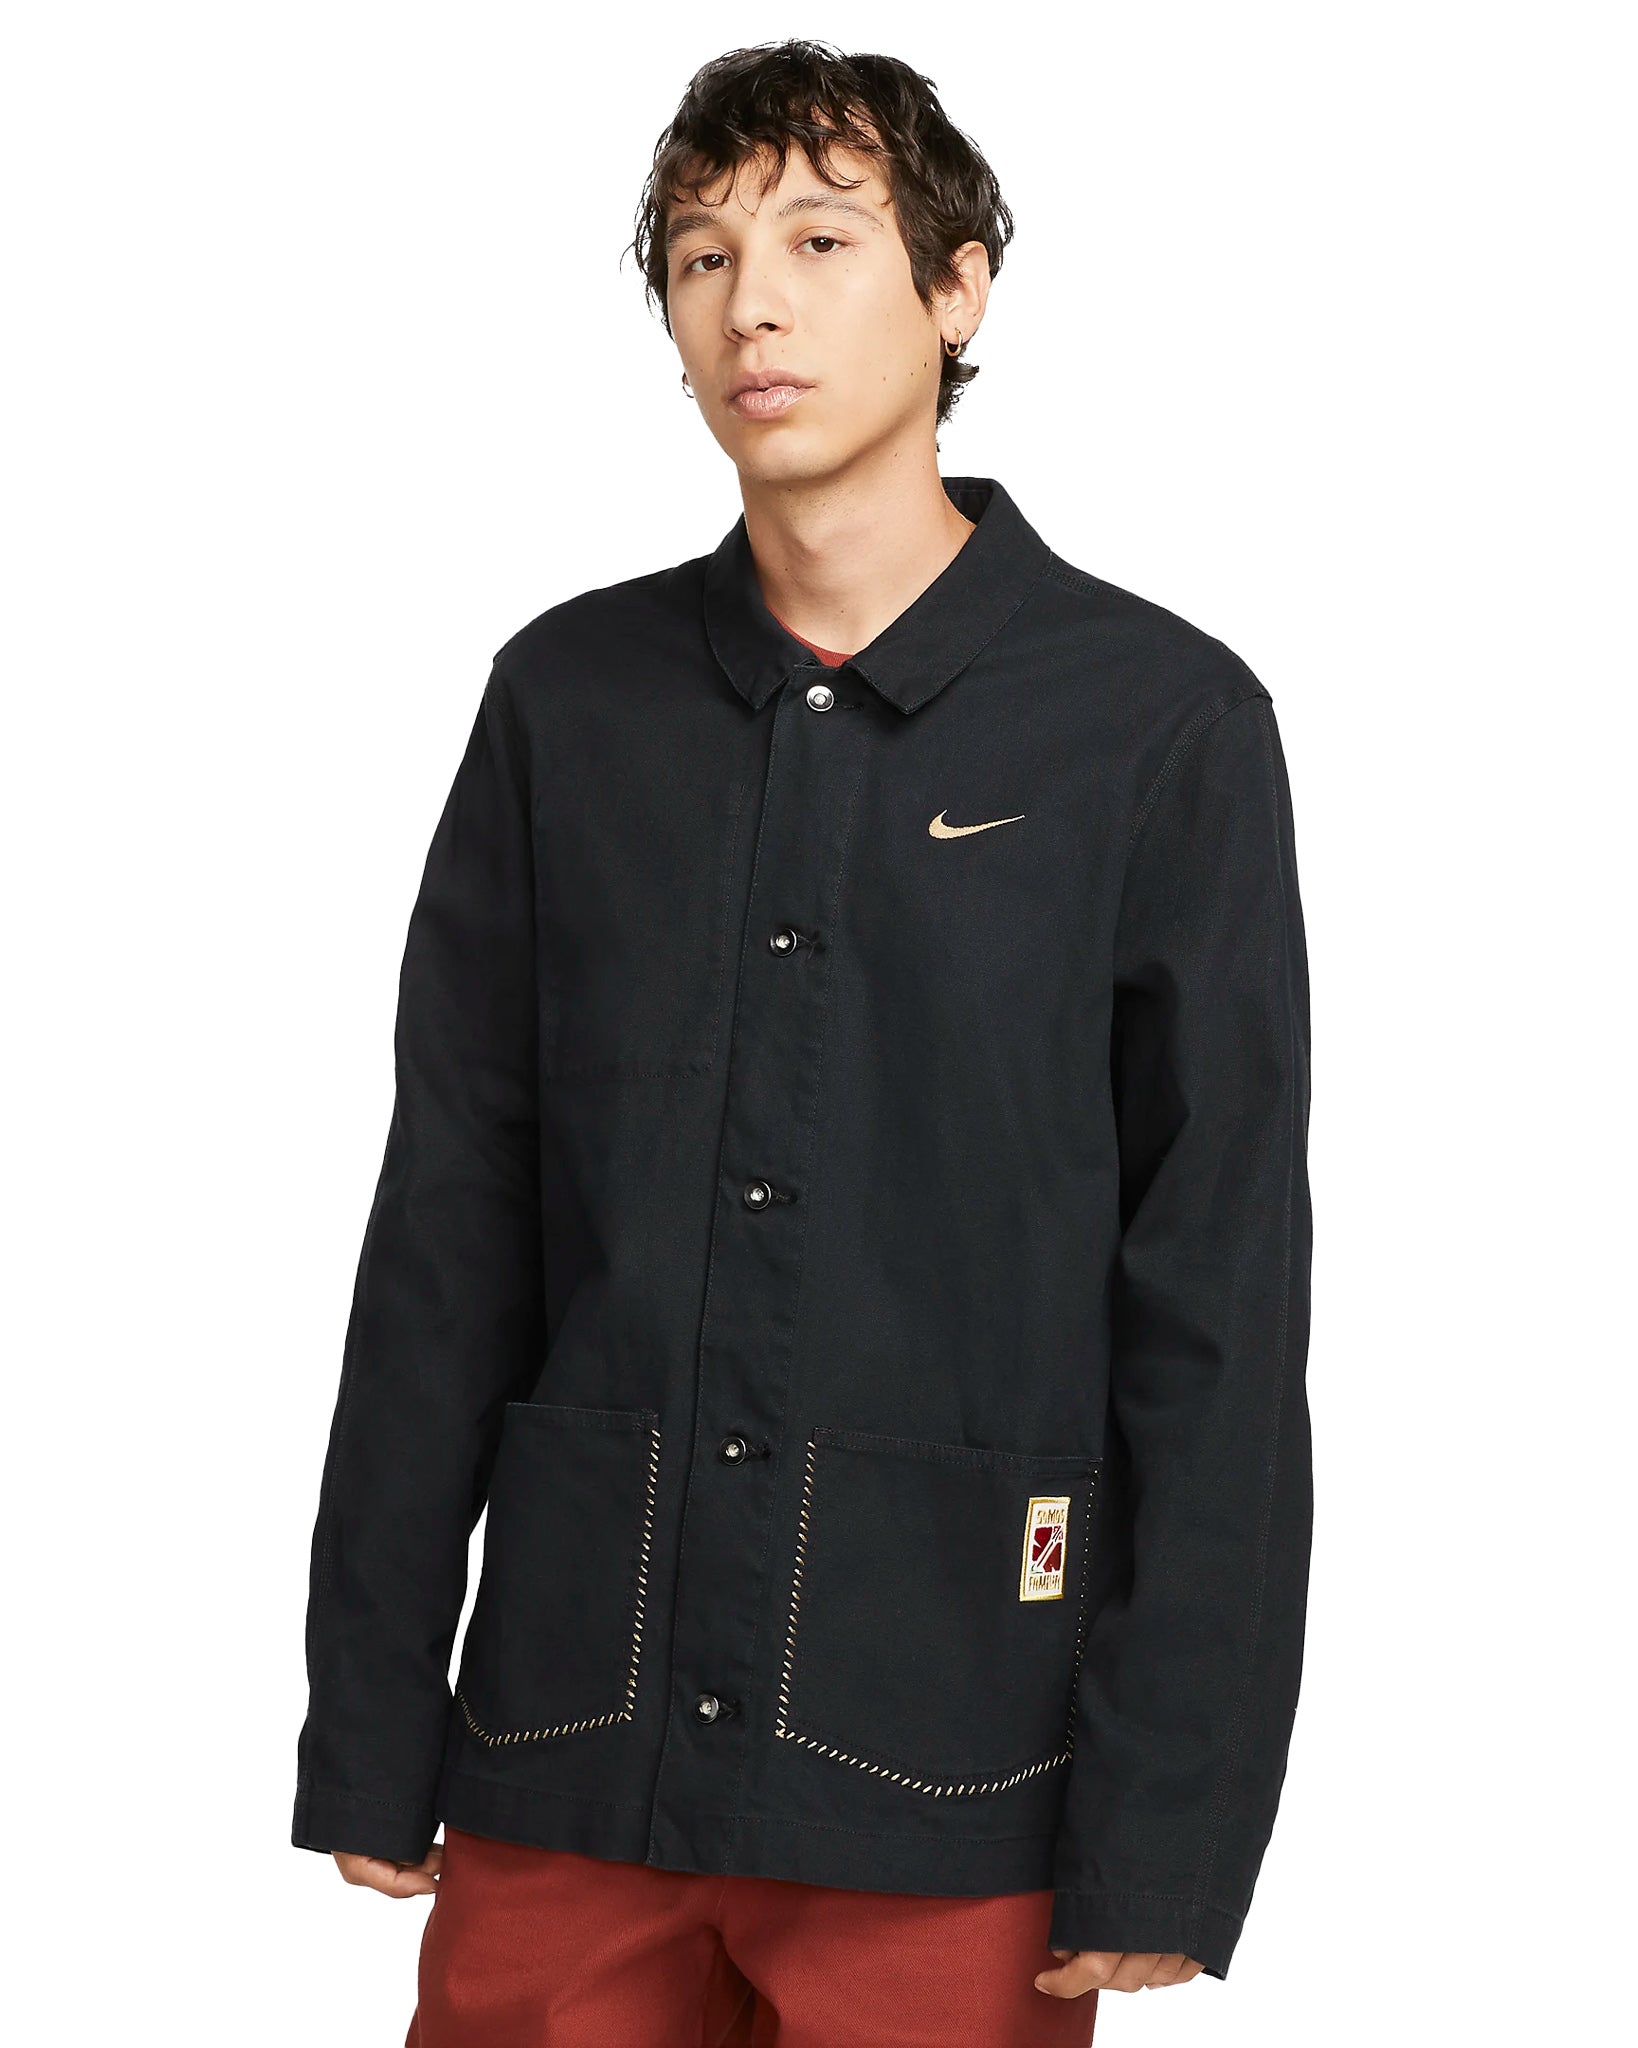 Nike Sportswear Somos Familia Coat Jacket "Black"